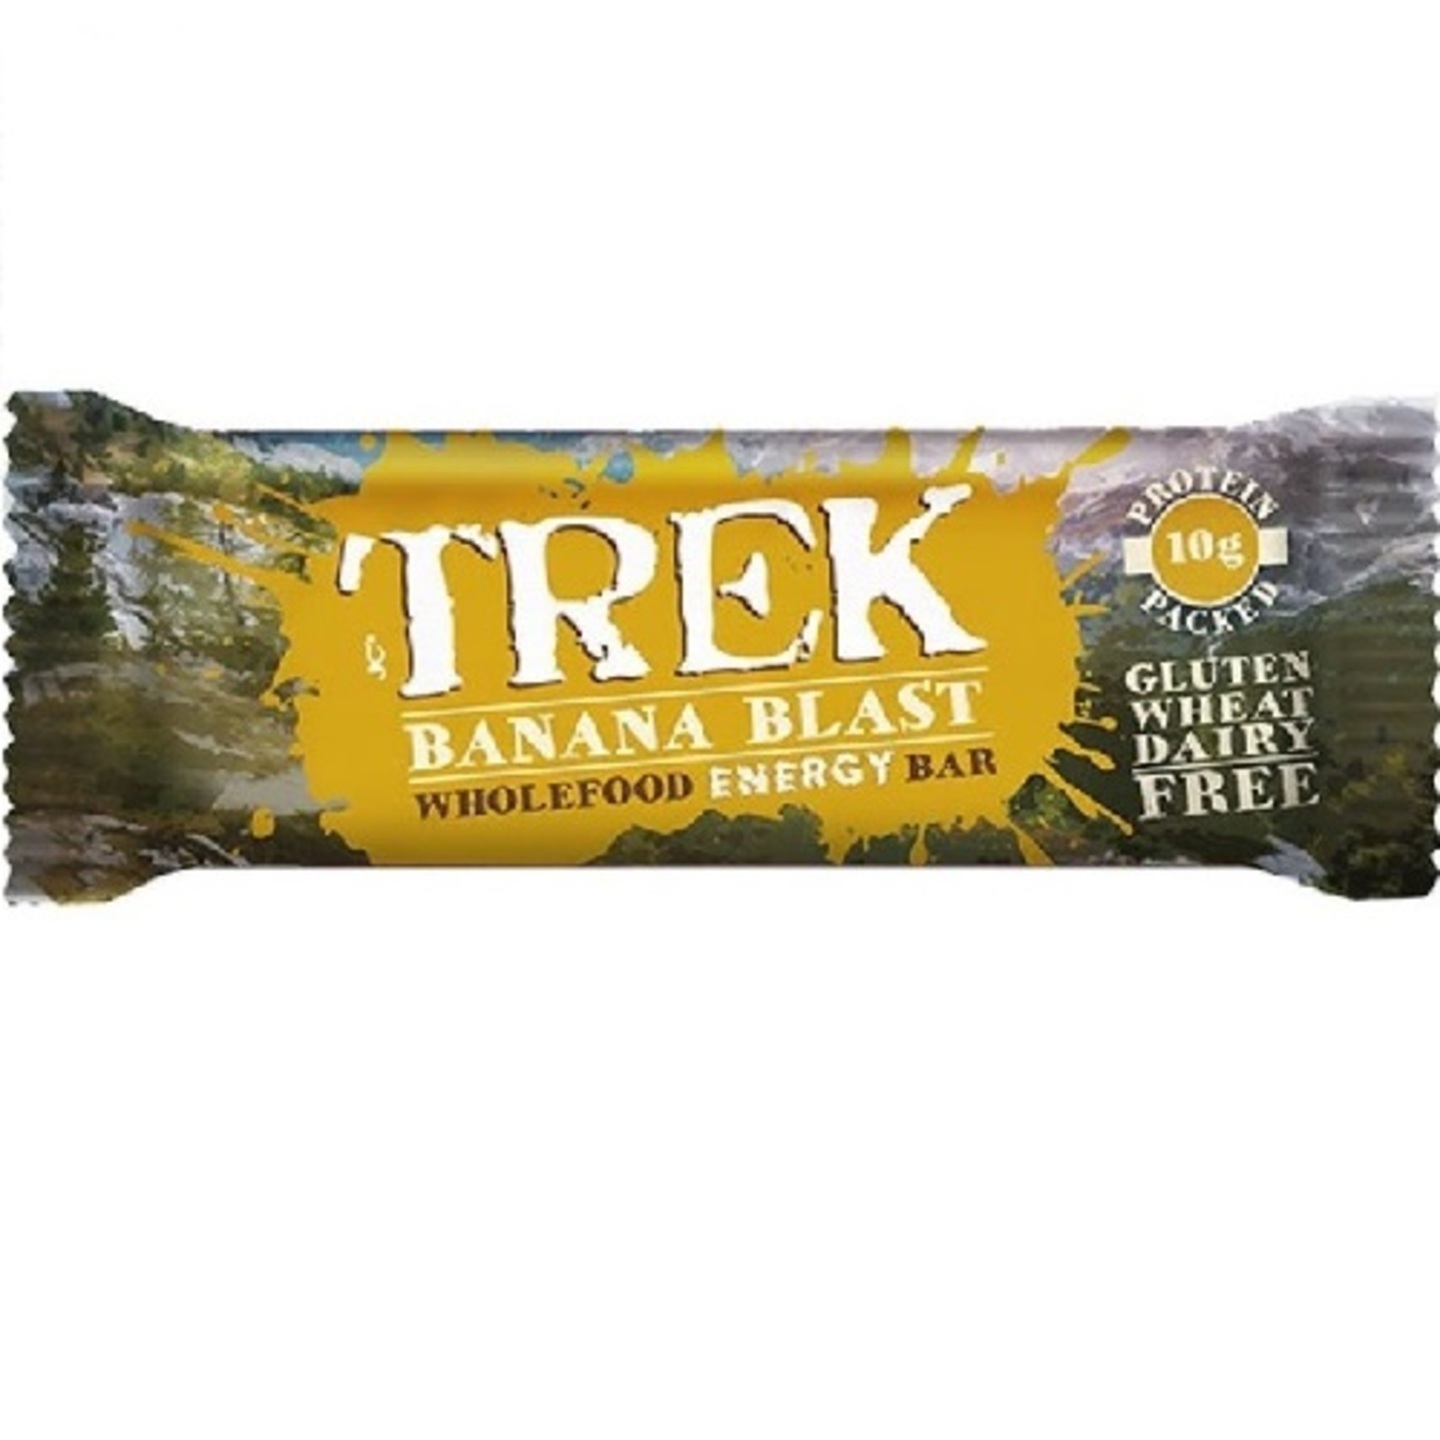 JCs Trek - Banana Blast Wholefood Energy Bar